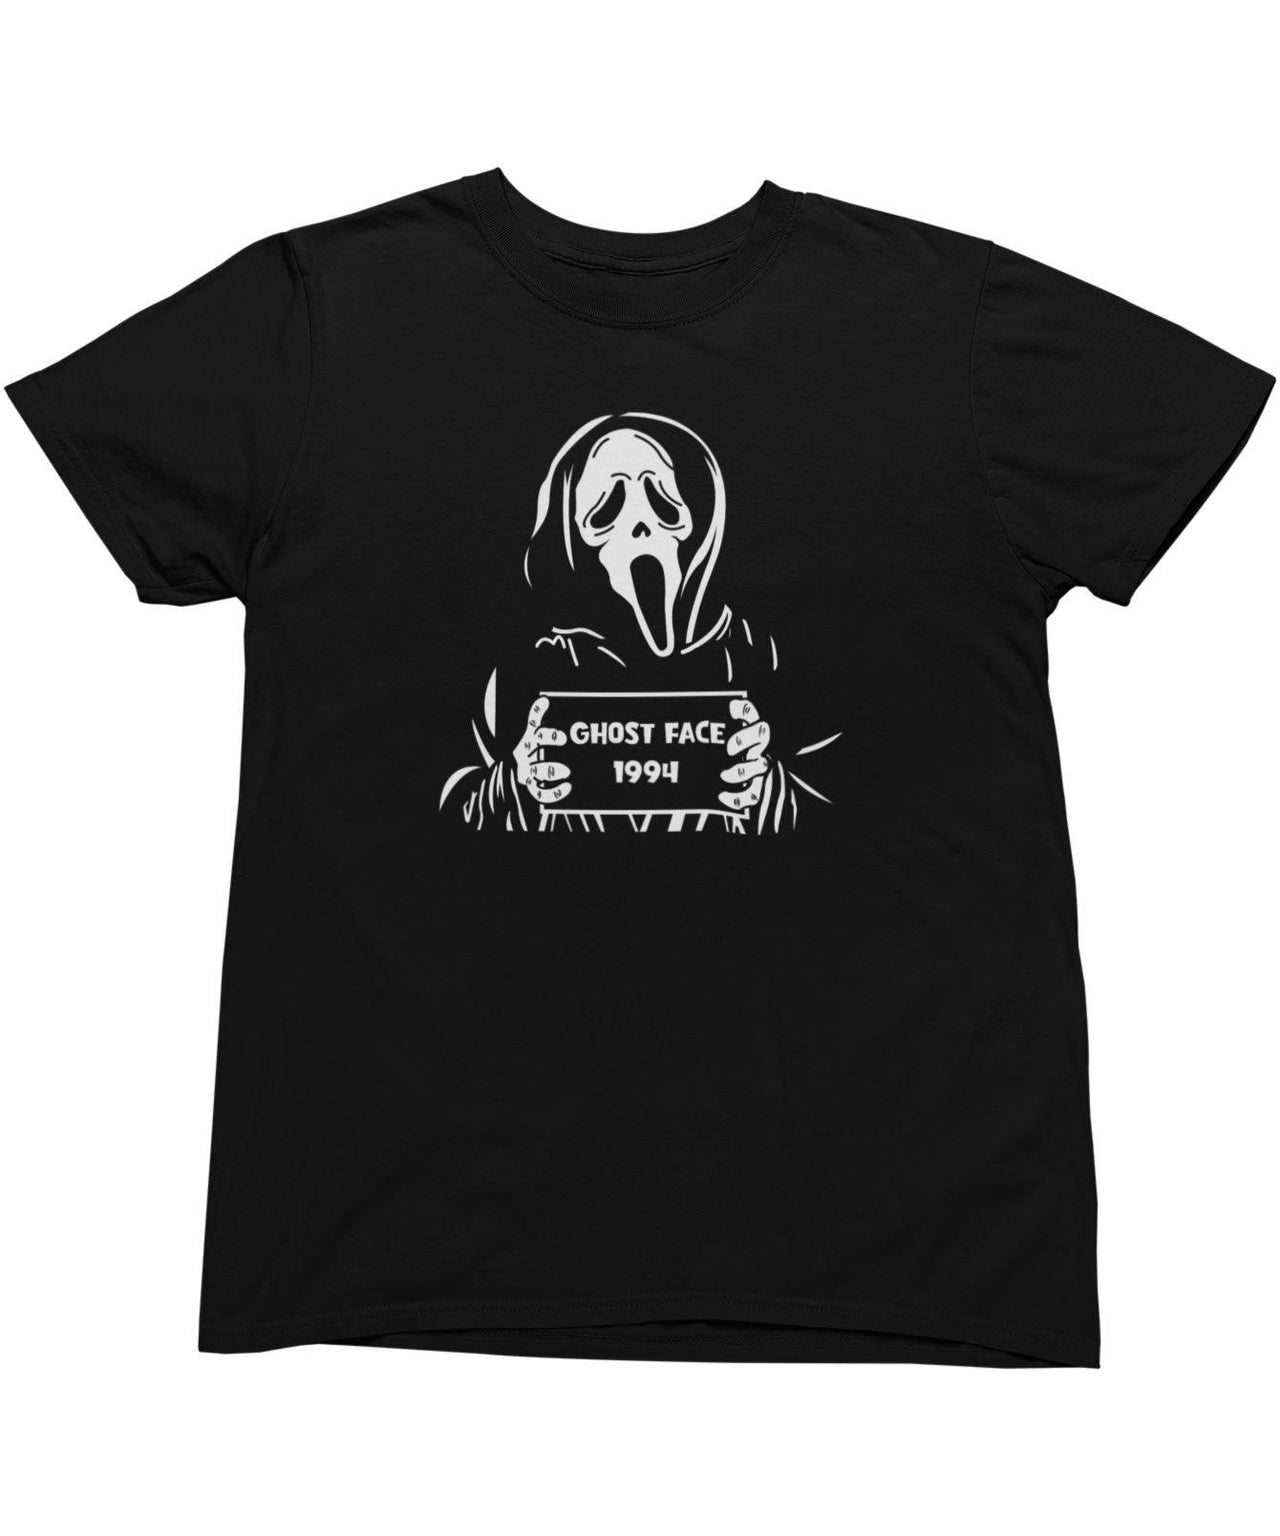 Ghostface Mugshot Horror Film Tribute Graphic T-Shirt For Men 8Ball